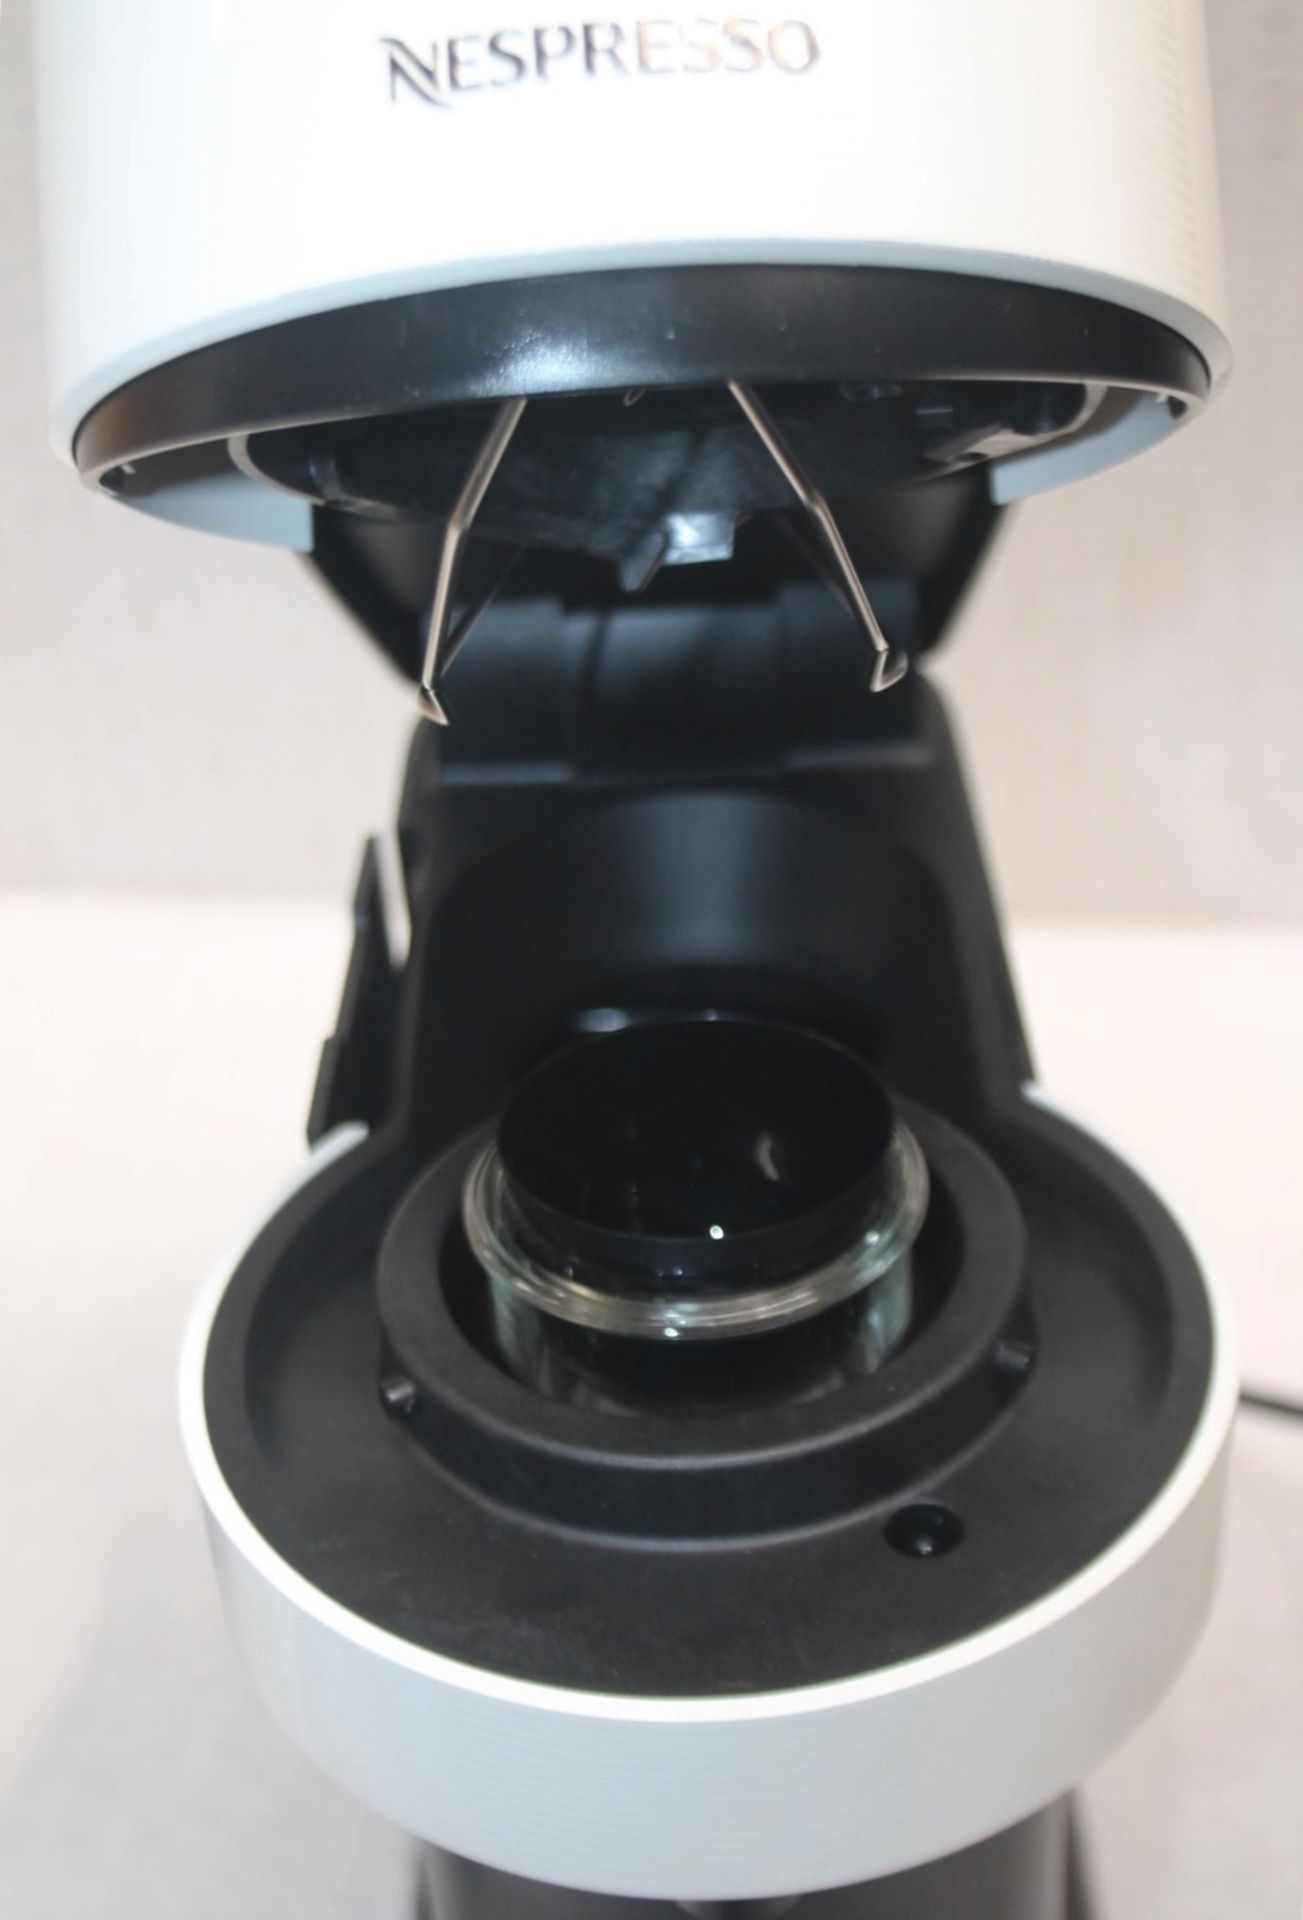 1 x NESPRESSO 'Vertou' Next Coffee Machine with Aeroccino3 Milk Frother - Original Price £200.00 - Image 20 of 21